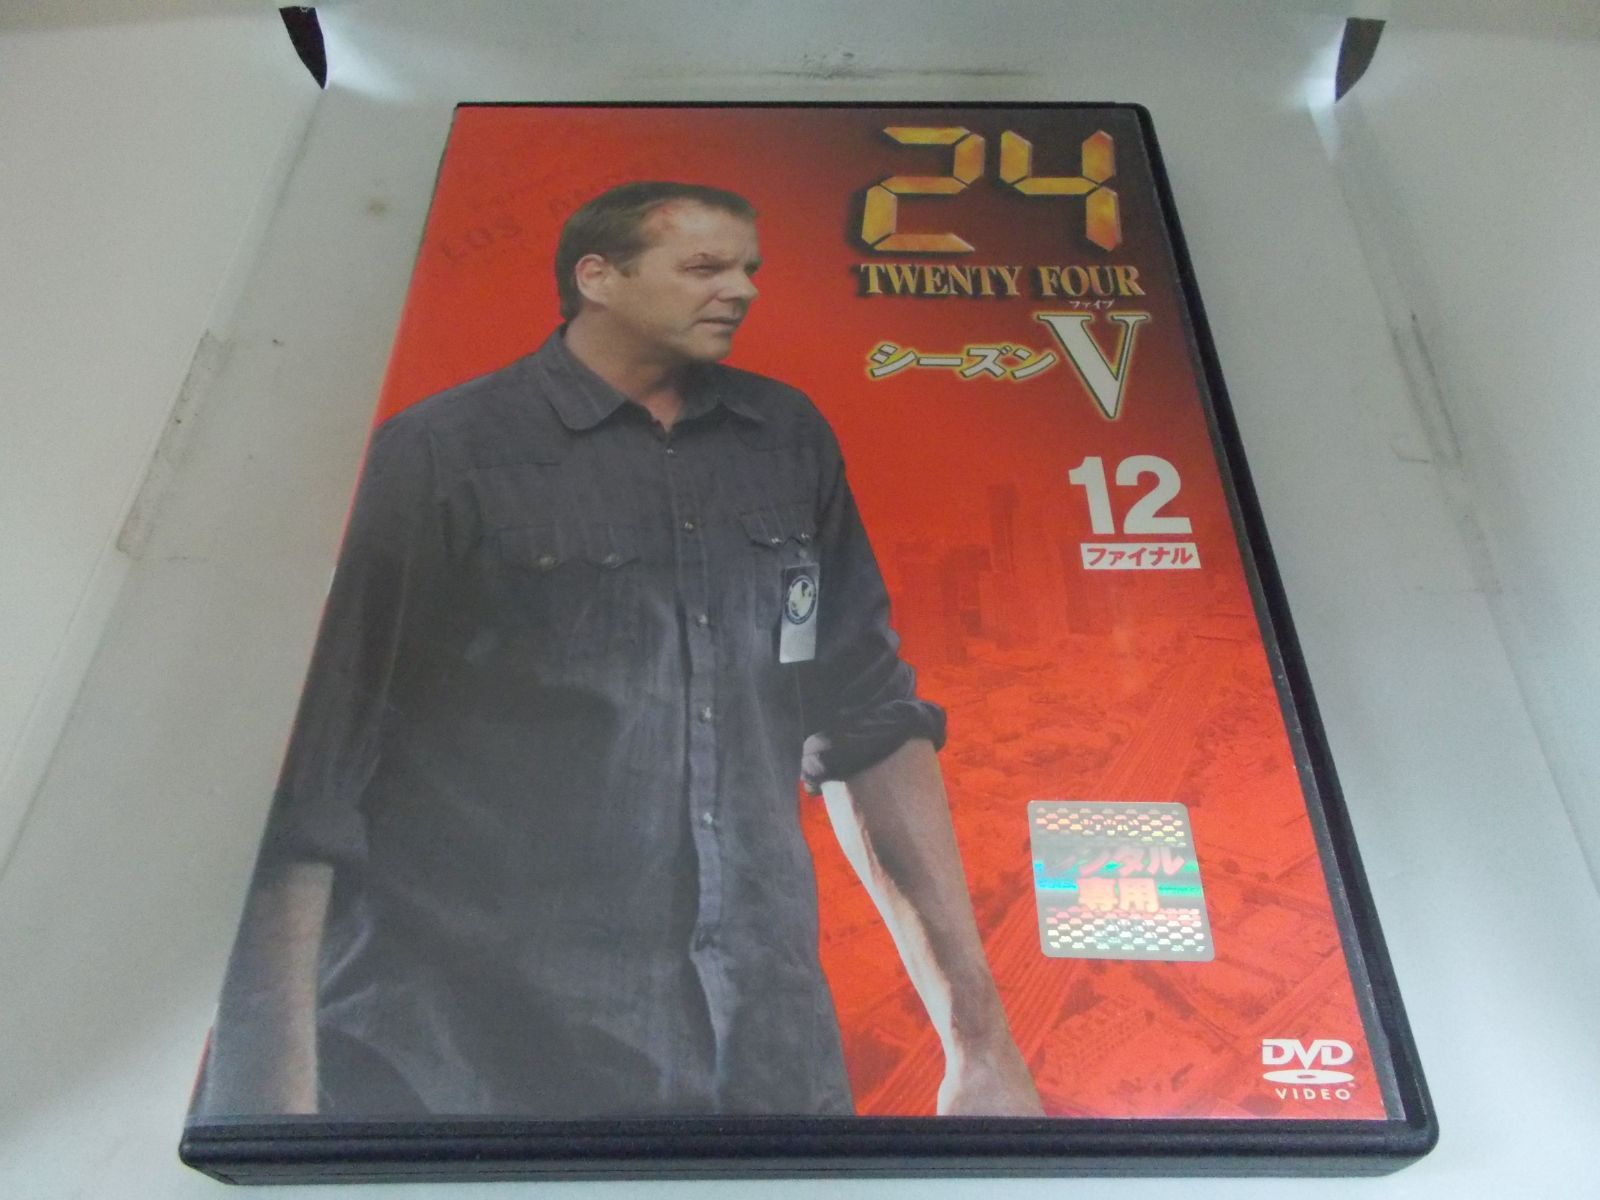 24 TWENTY Four トゥエンティフォー シーズン5 vo12 DVD